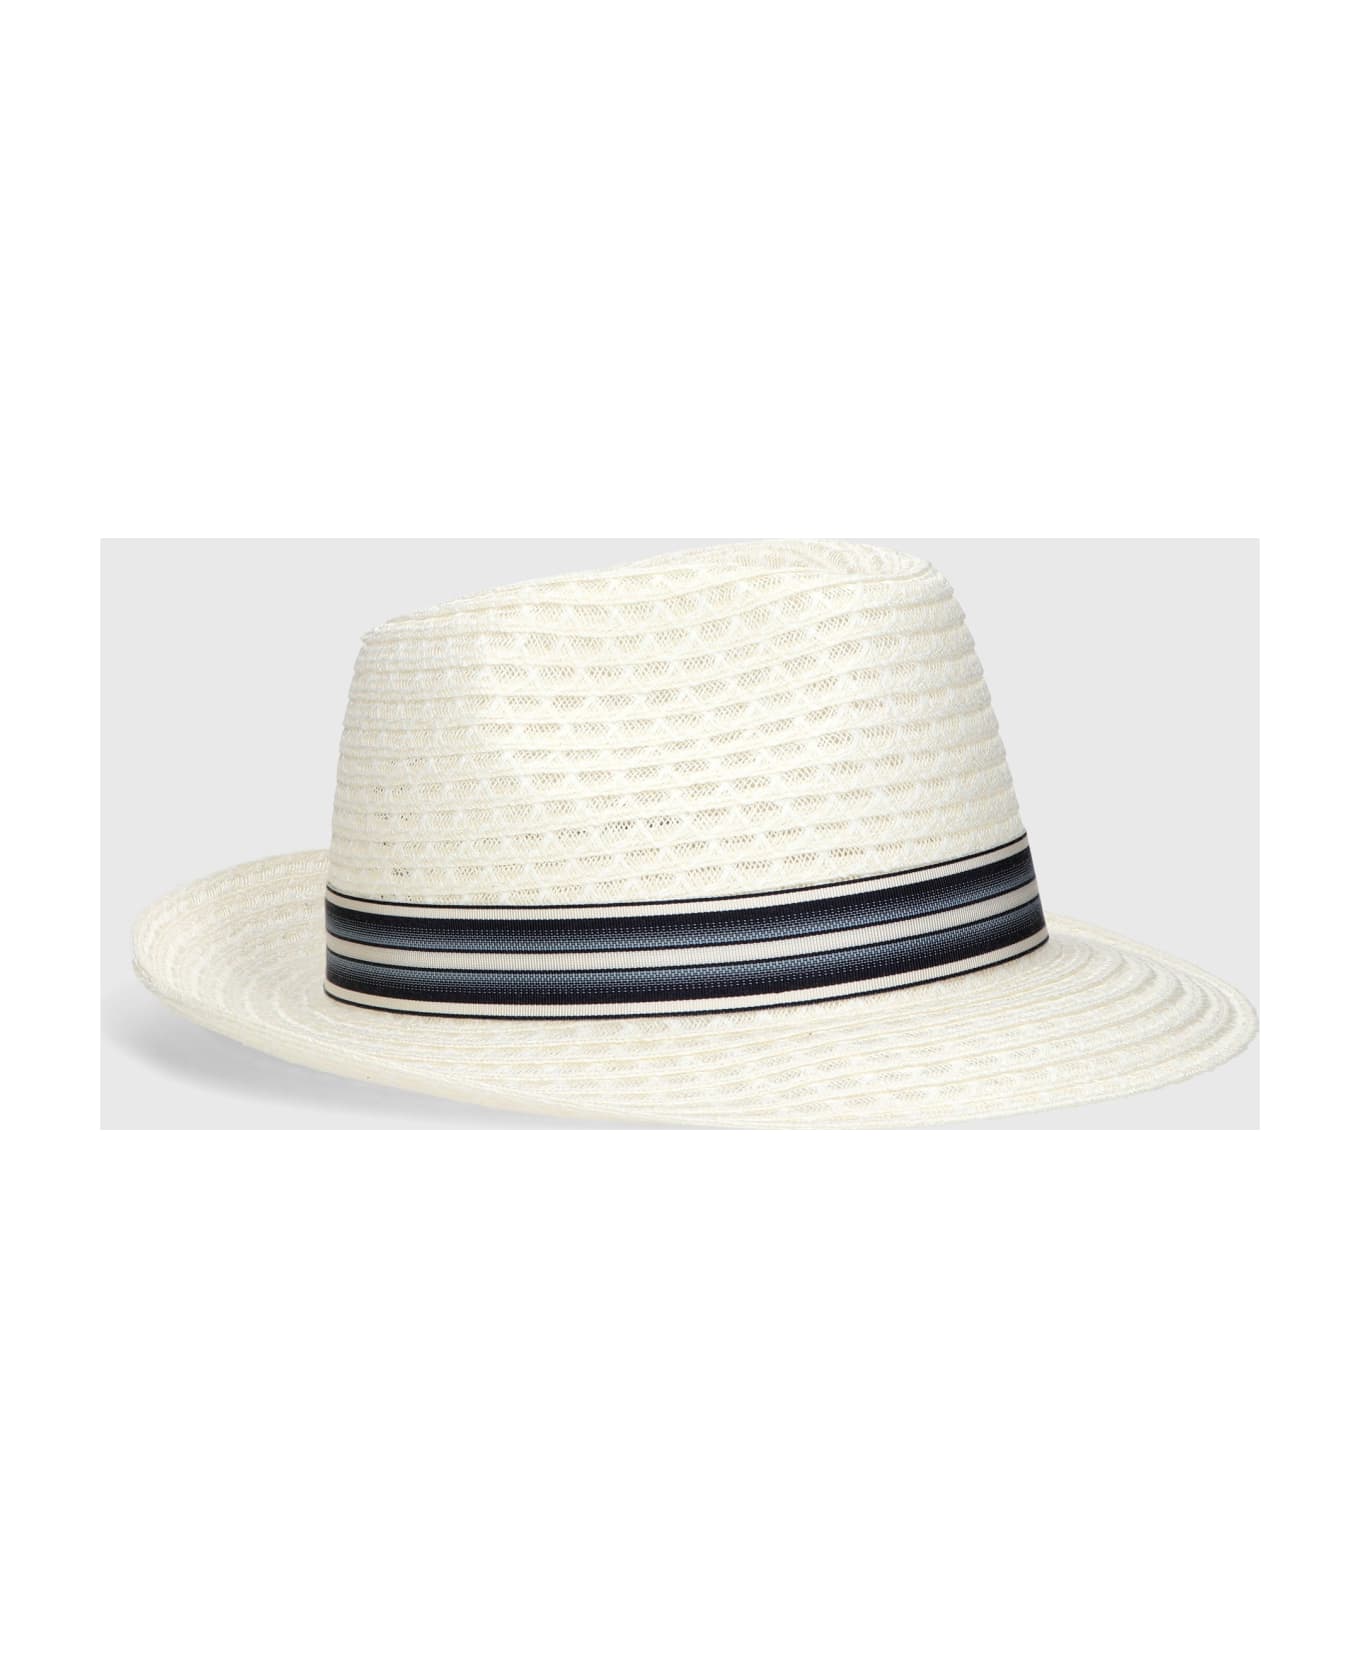 Borsalino Edward Braided Cotton Hemp - CREAM, BLUE/WHITE HAT BAND 帽子